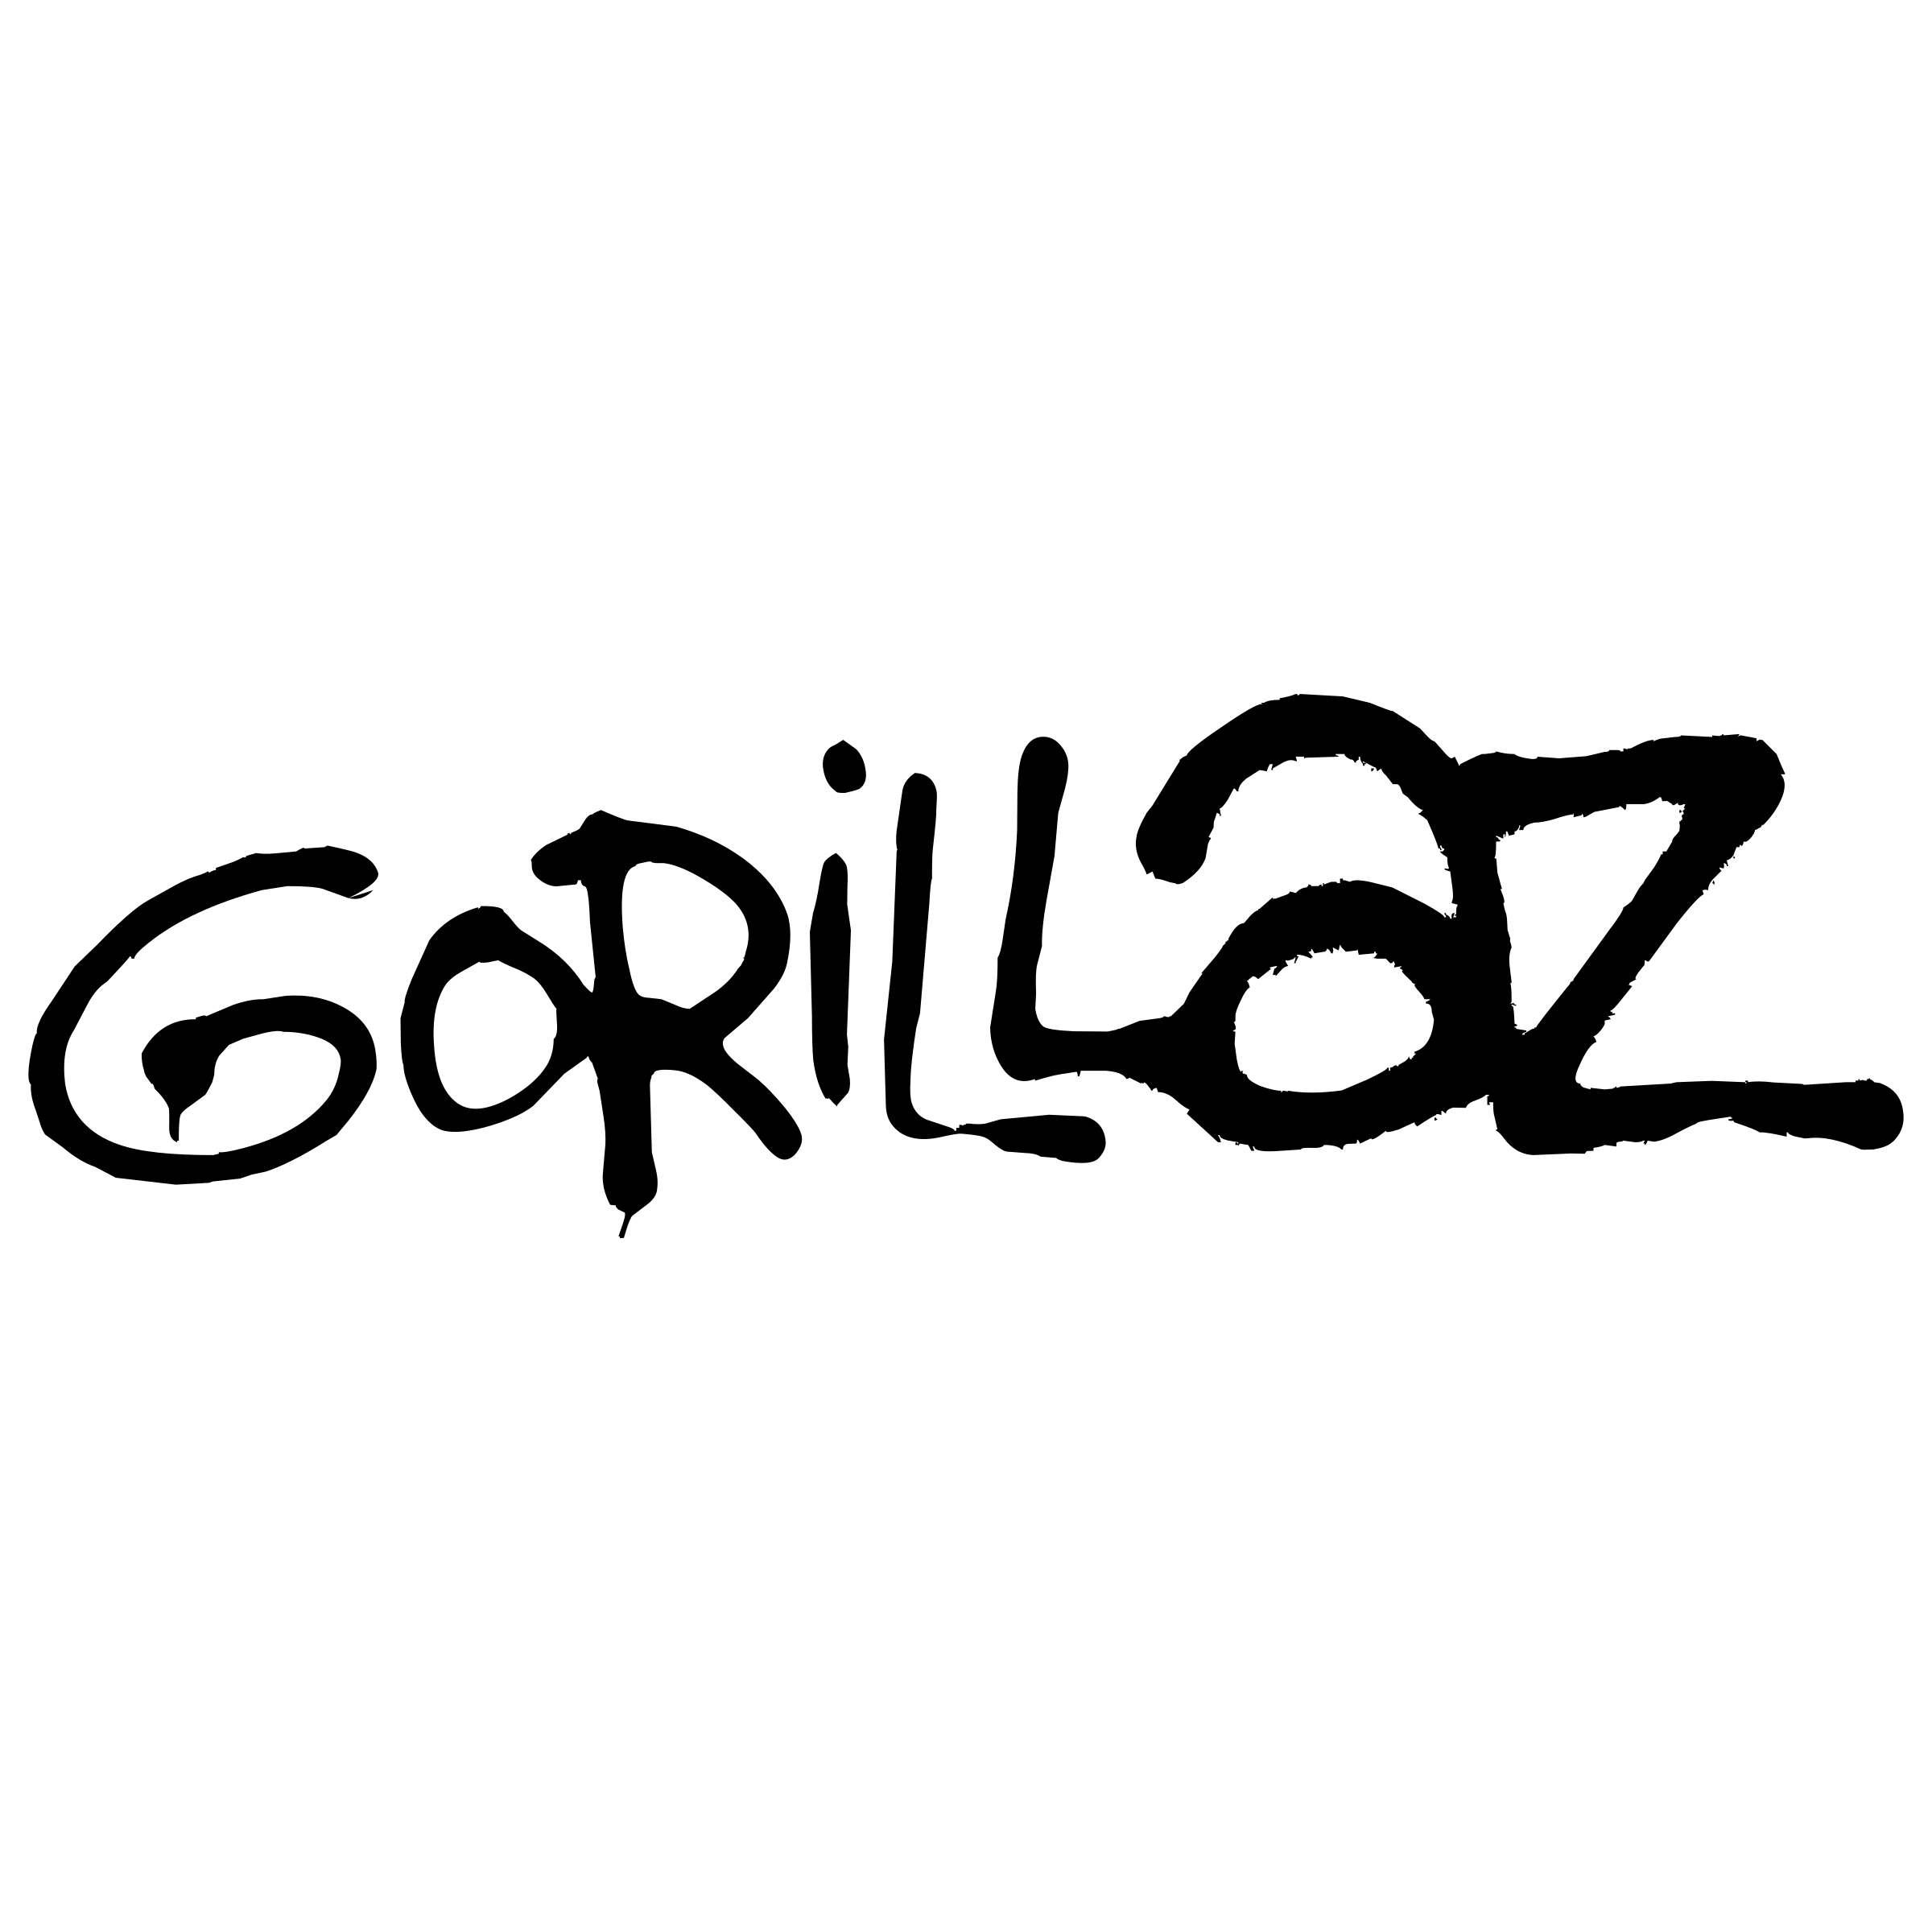 Gorillaz Black and White Logo - Gorillaz Logo PNG Transparent & SVG Vector - Freebie Supply